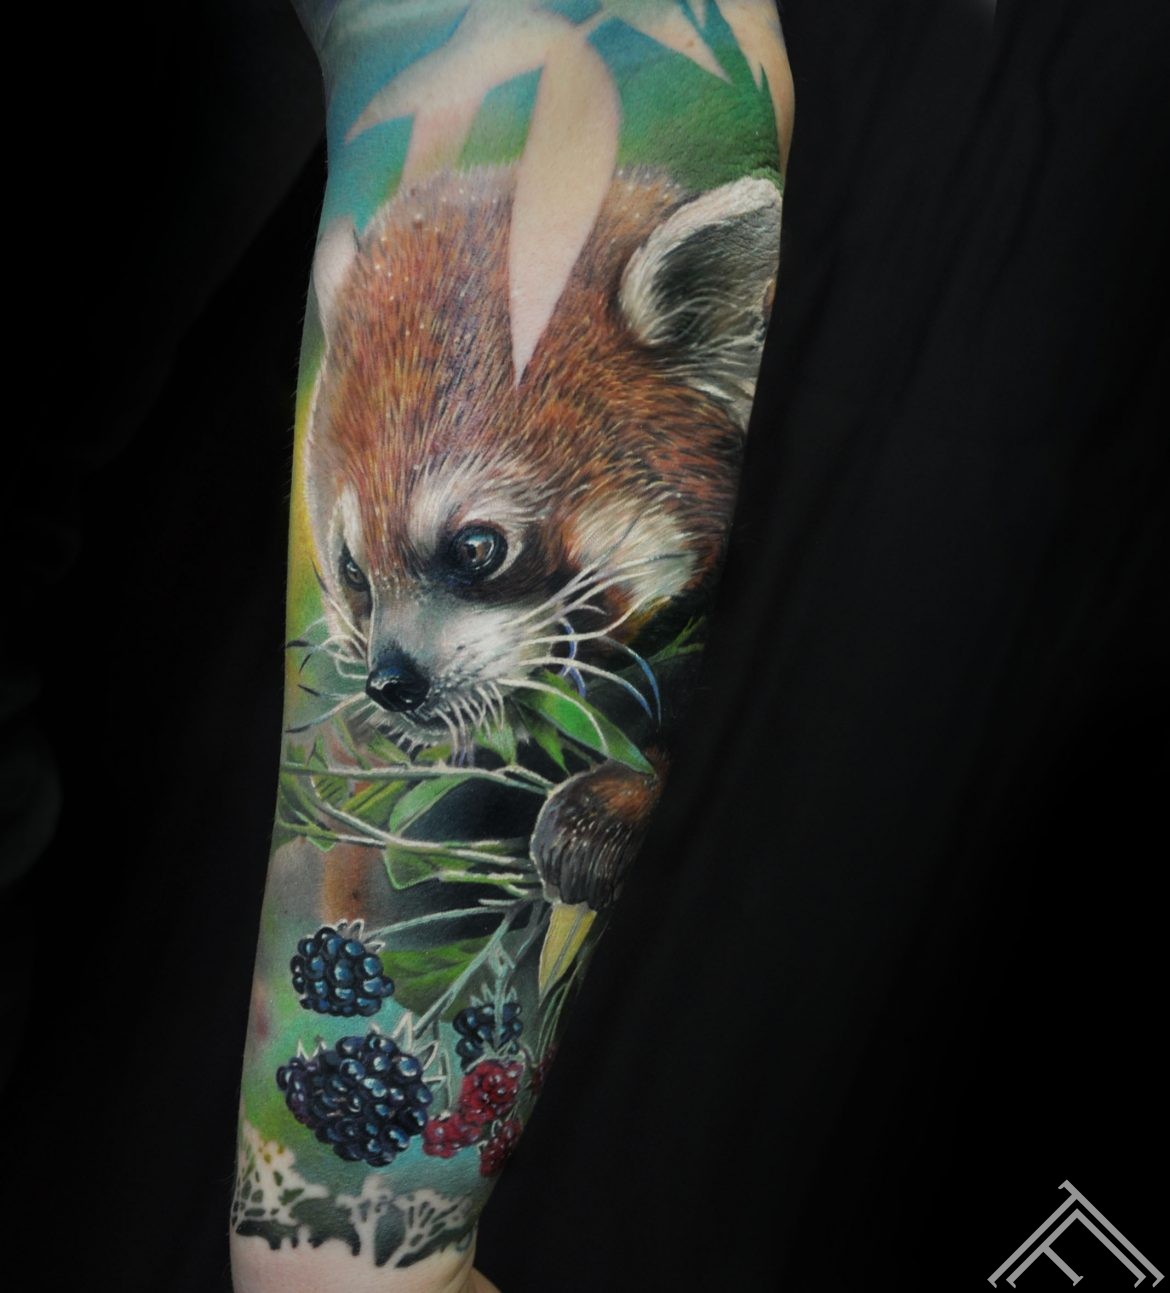 redpanda-panda-berries-ogas-tetovejums-tattoo-tattoofrequency-riga-art-marispavlo